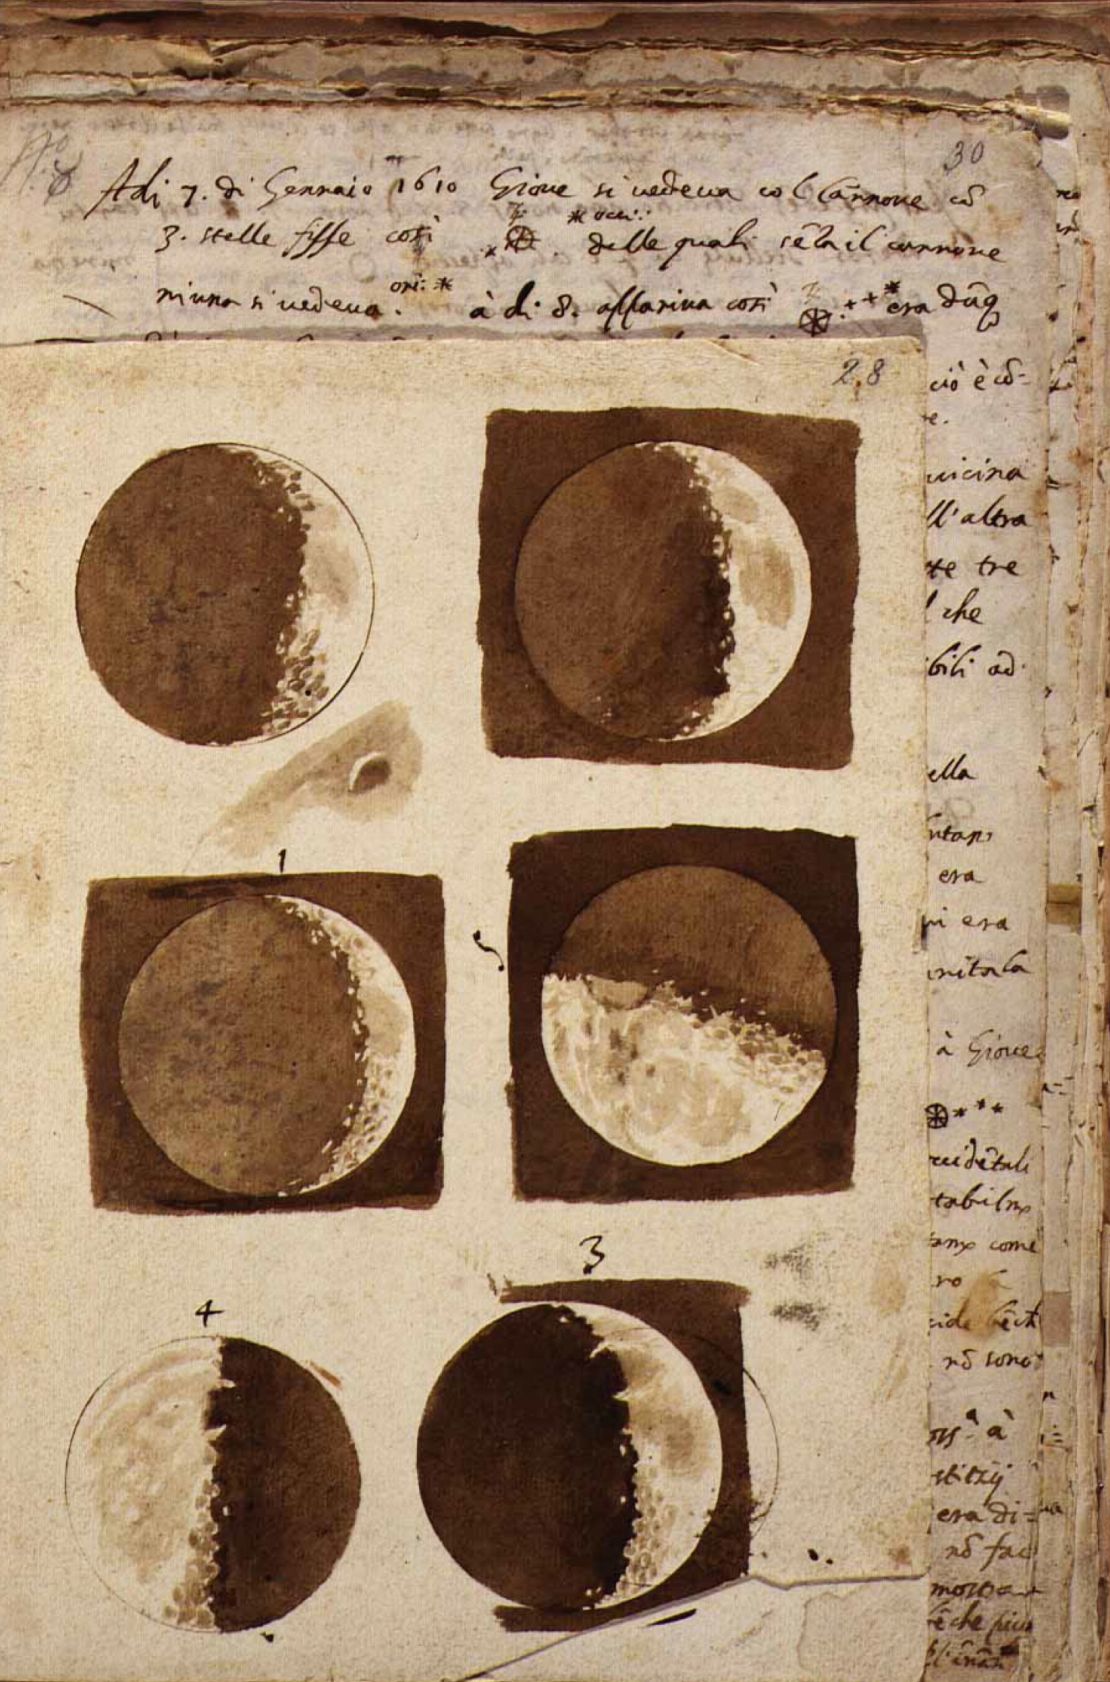 "The Moon" (1609) by Galileo Galilei